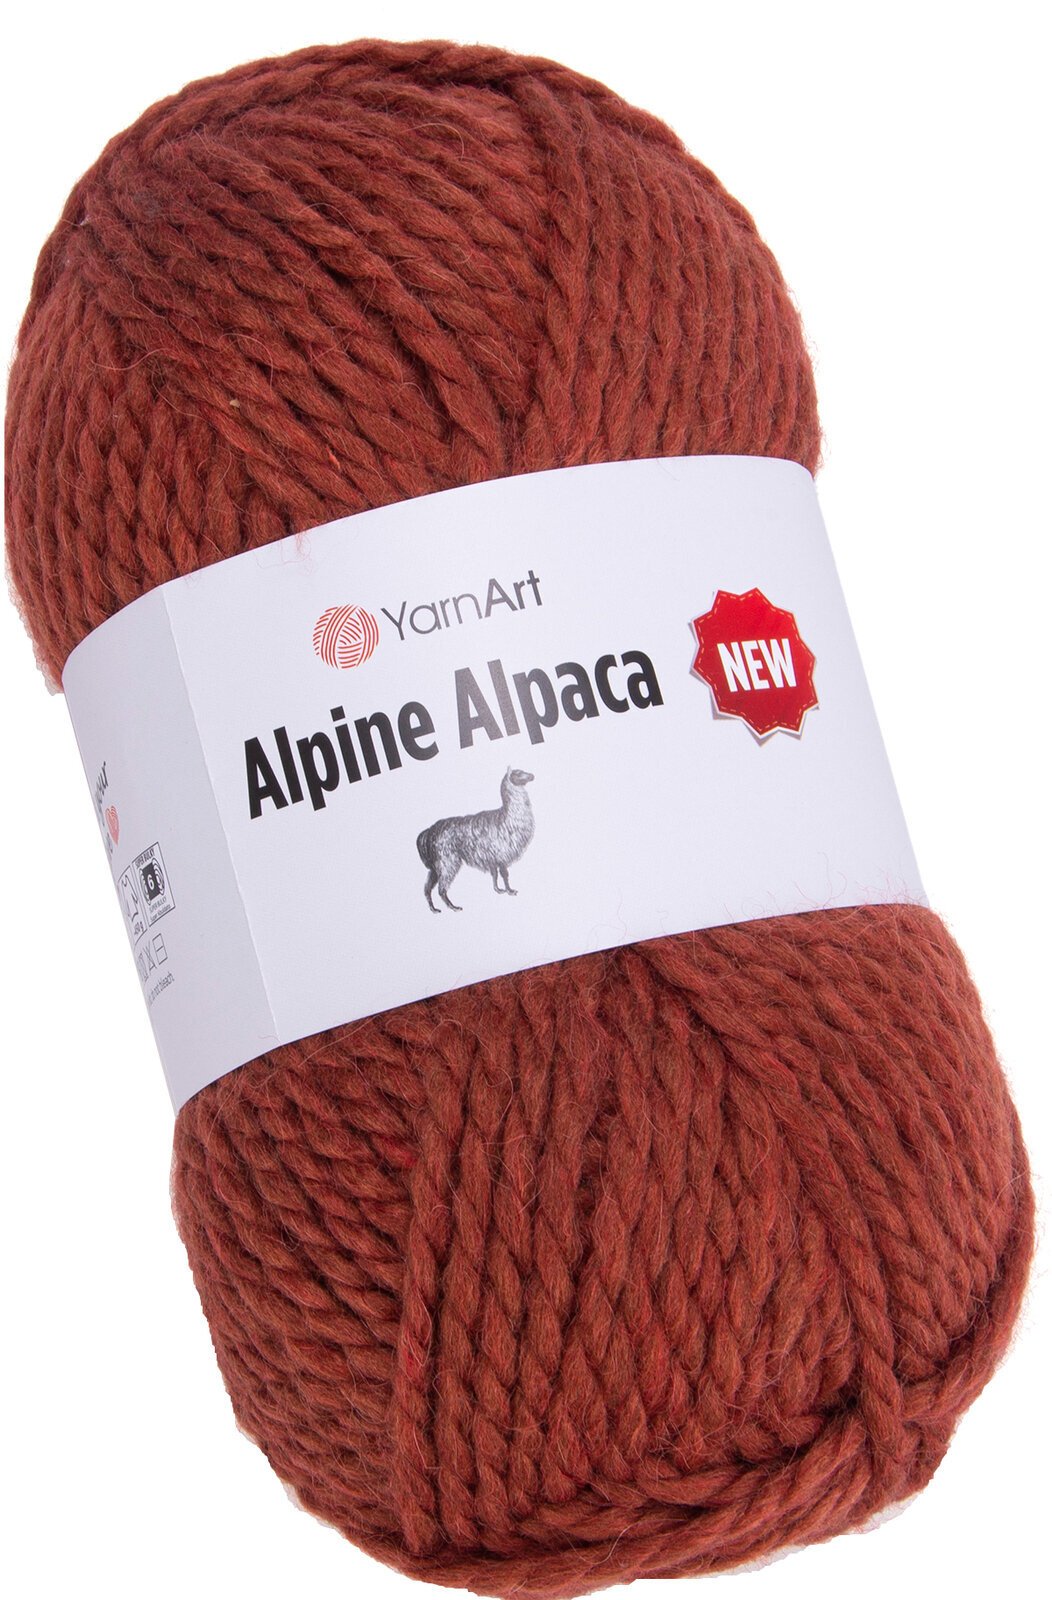 Knitting Yarn Yarn Art Alpine Alpaca New Knitting Yarn 1452